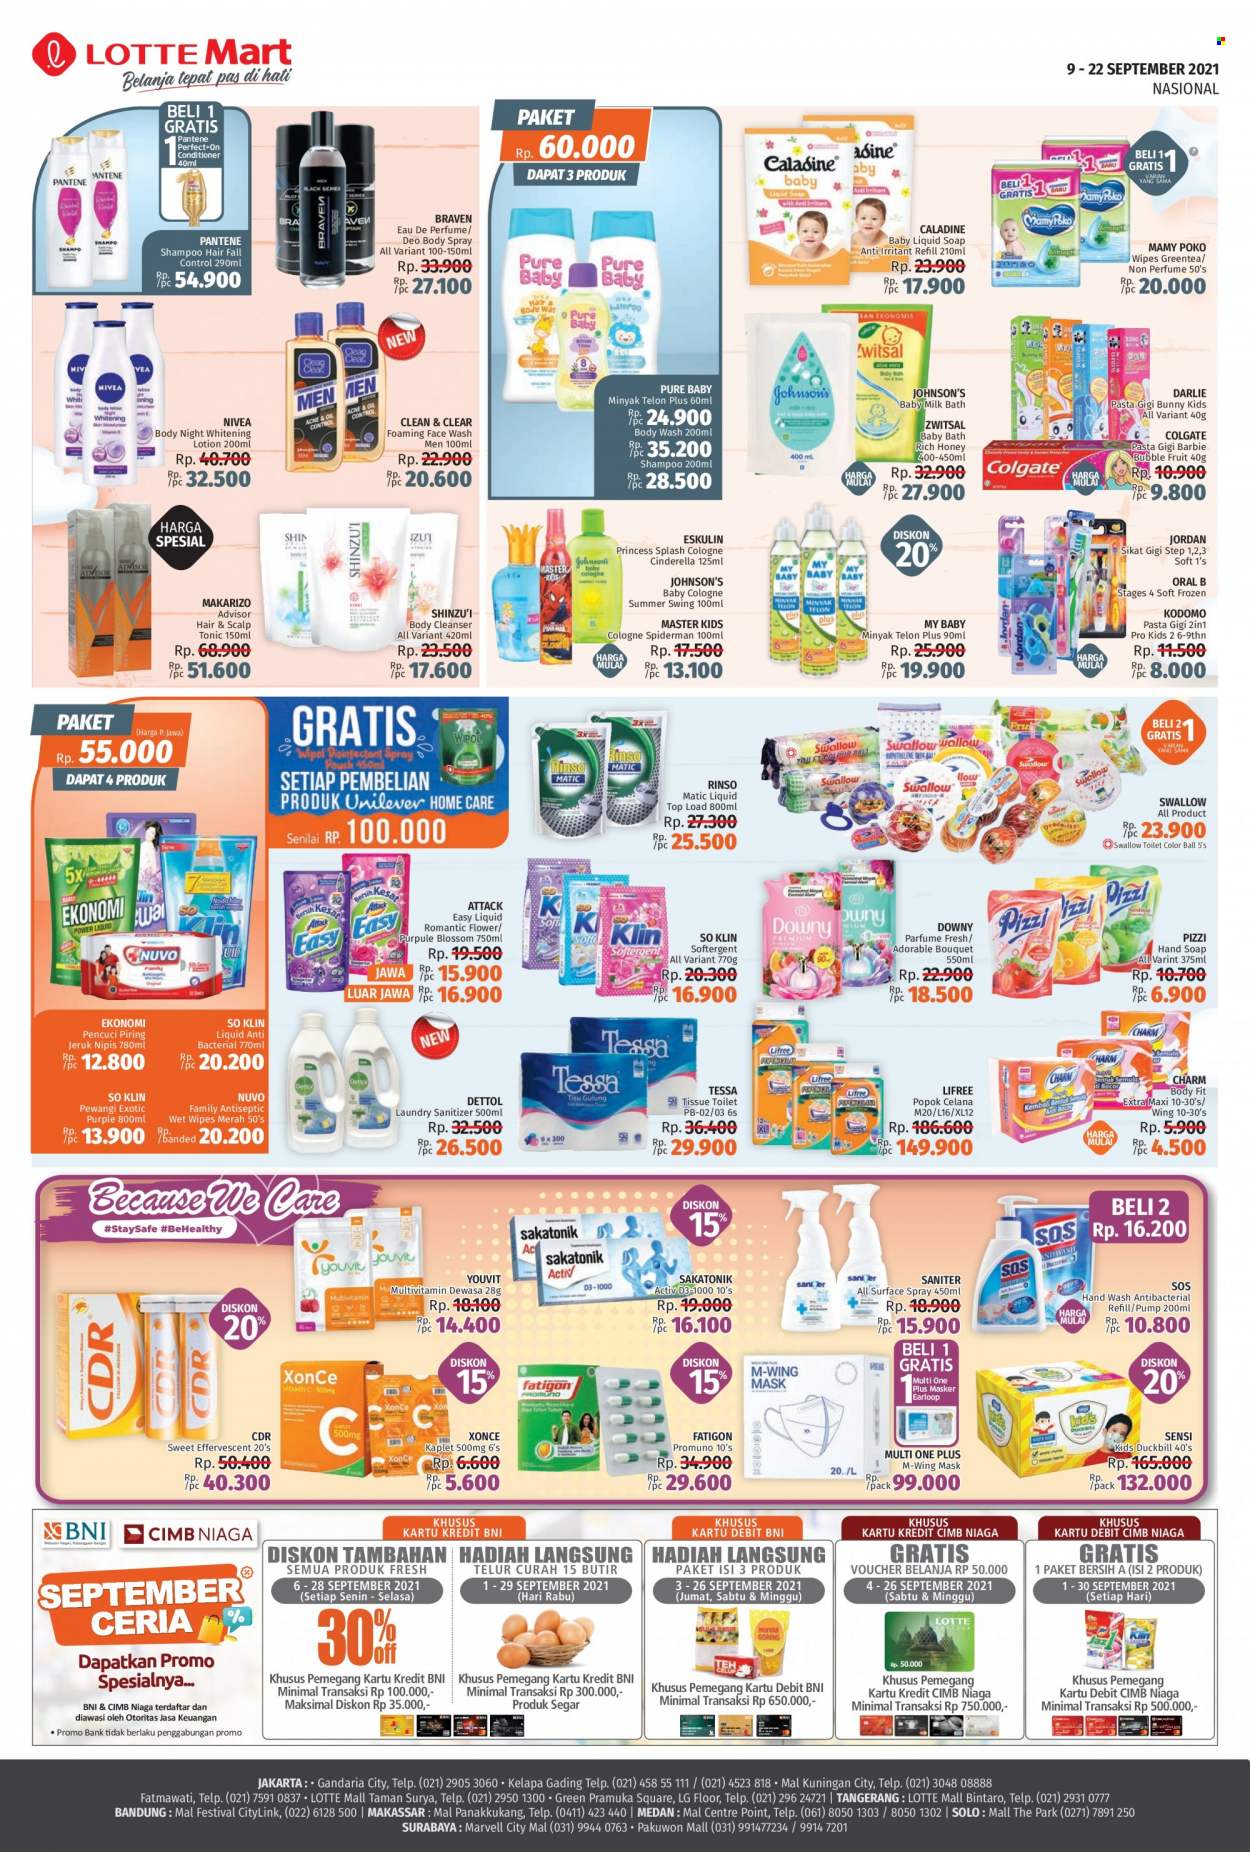 thumbnail - Promo LOTTE Mart - 09/09/2021 - 09/22/2021 - Produk diskon - milk, tissue, so klin, fruit, body wash, wipes, zwitsal, toilet, top, surface, swallow, telur, tessa, soap, rinso, sakatonik, sensi, shampoo, sikat, pantene, pewangi, piring, lg, lifree, liquid soap, lotion, mamy poko, mask, multivitamins, my baby, nivea, nuvo, oral b, popok celana, milk bath, minyak, minyak telon, jeruk, jeruk nipis, honey, charm, harga mulai, eskulin, frozen, dettol, downy, eau de parfume, d3, celana, cleanser, colgate, caladine, body spray, barbie, bath, ball. Halaman 8.